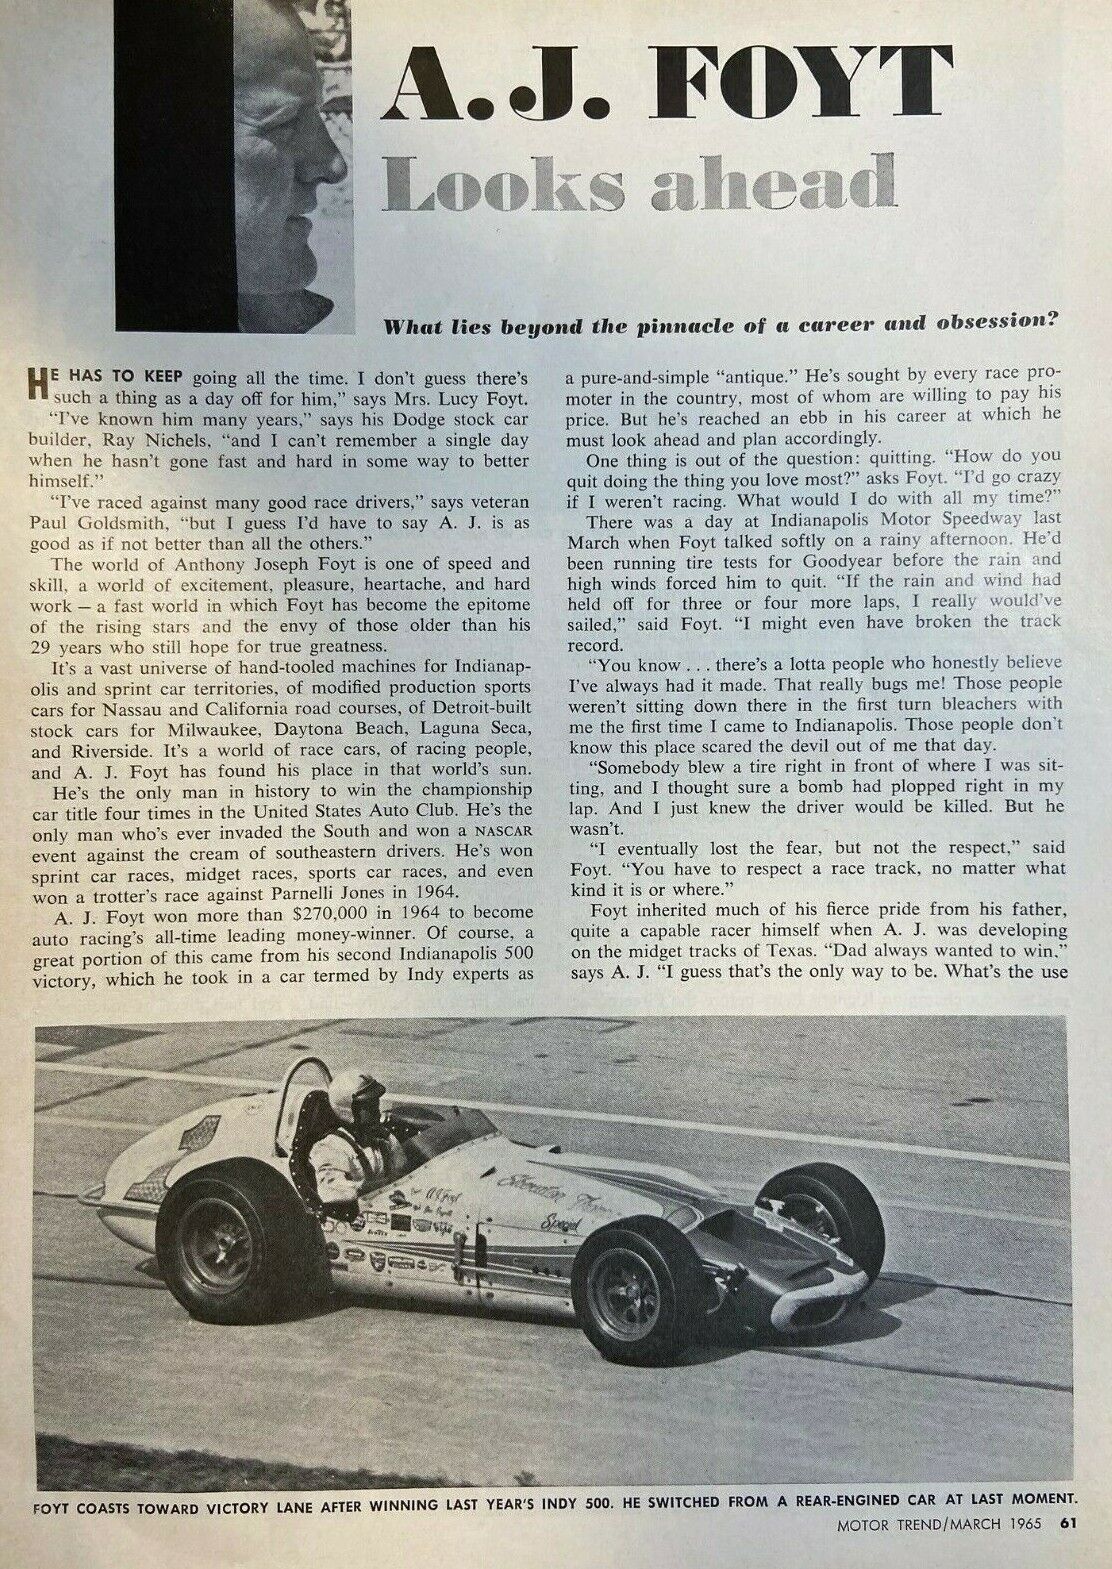 1965 Race Car Driver A. J. Foyt illustrated